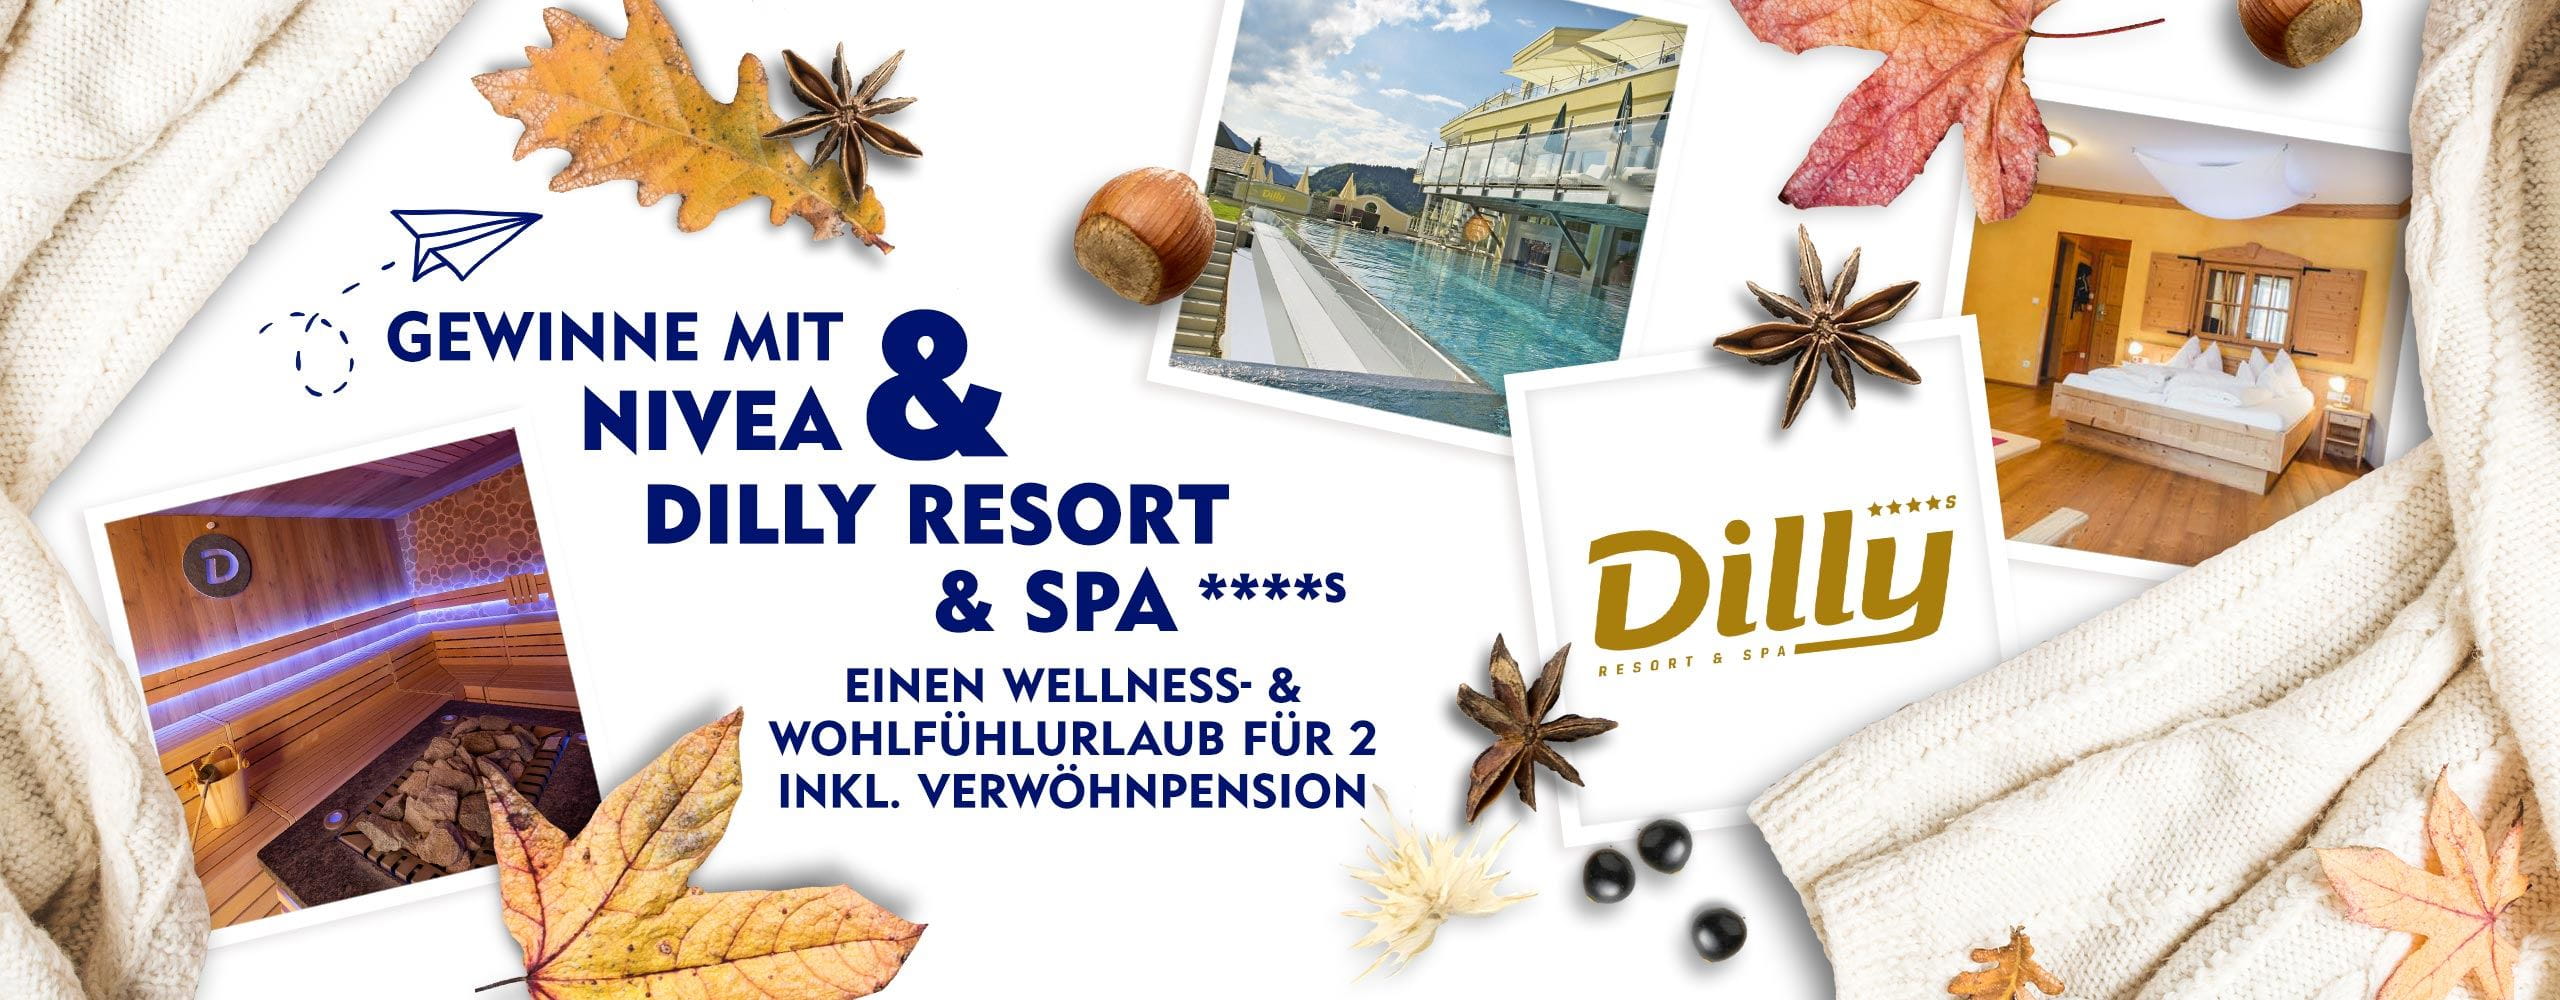 DIlly Resort & Spa